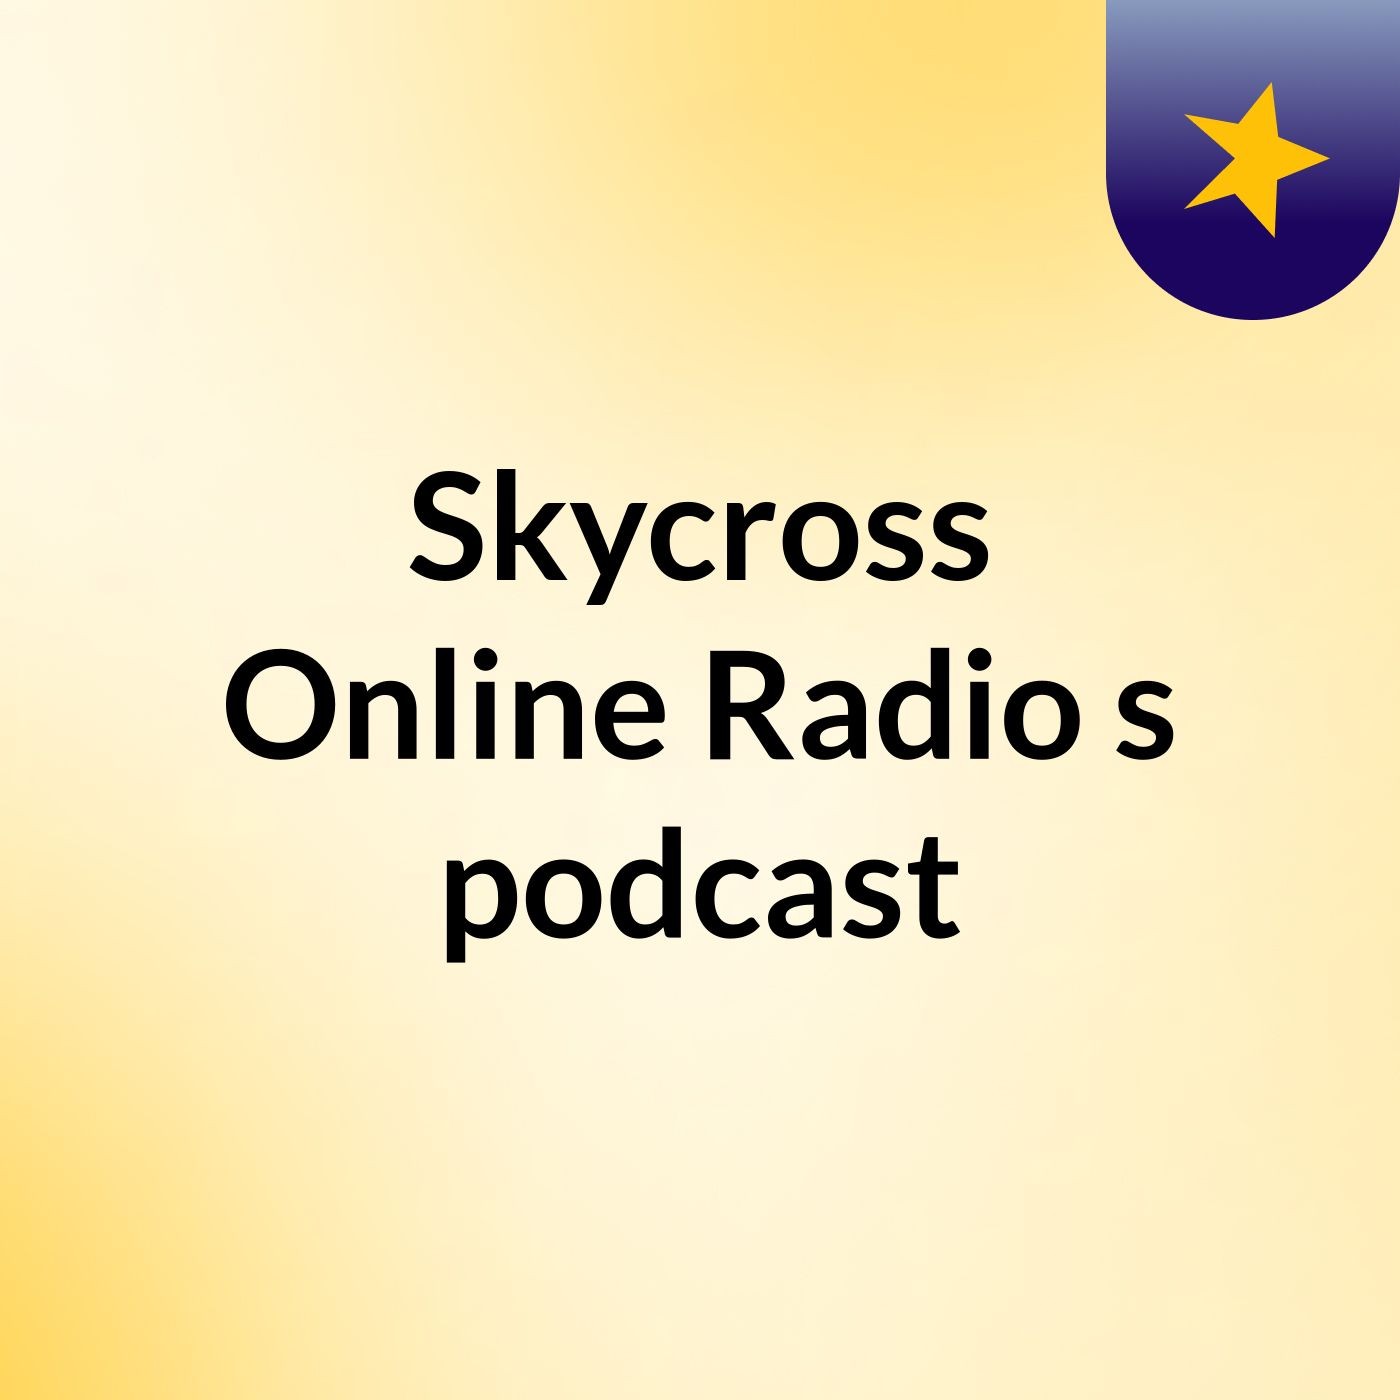 Episode 11 - Skycross Online Radio's podcast